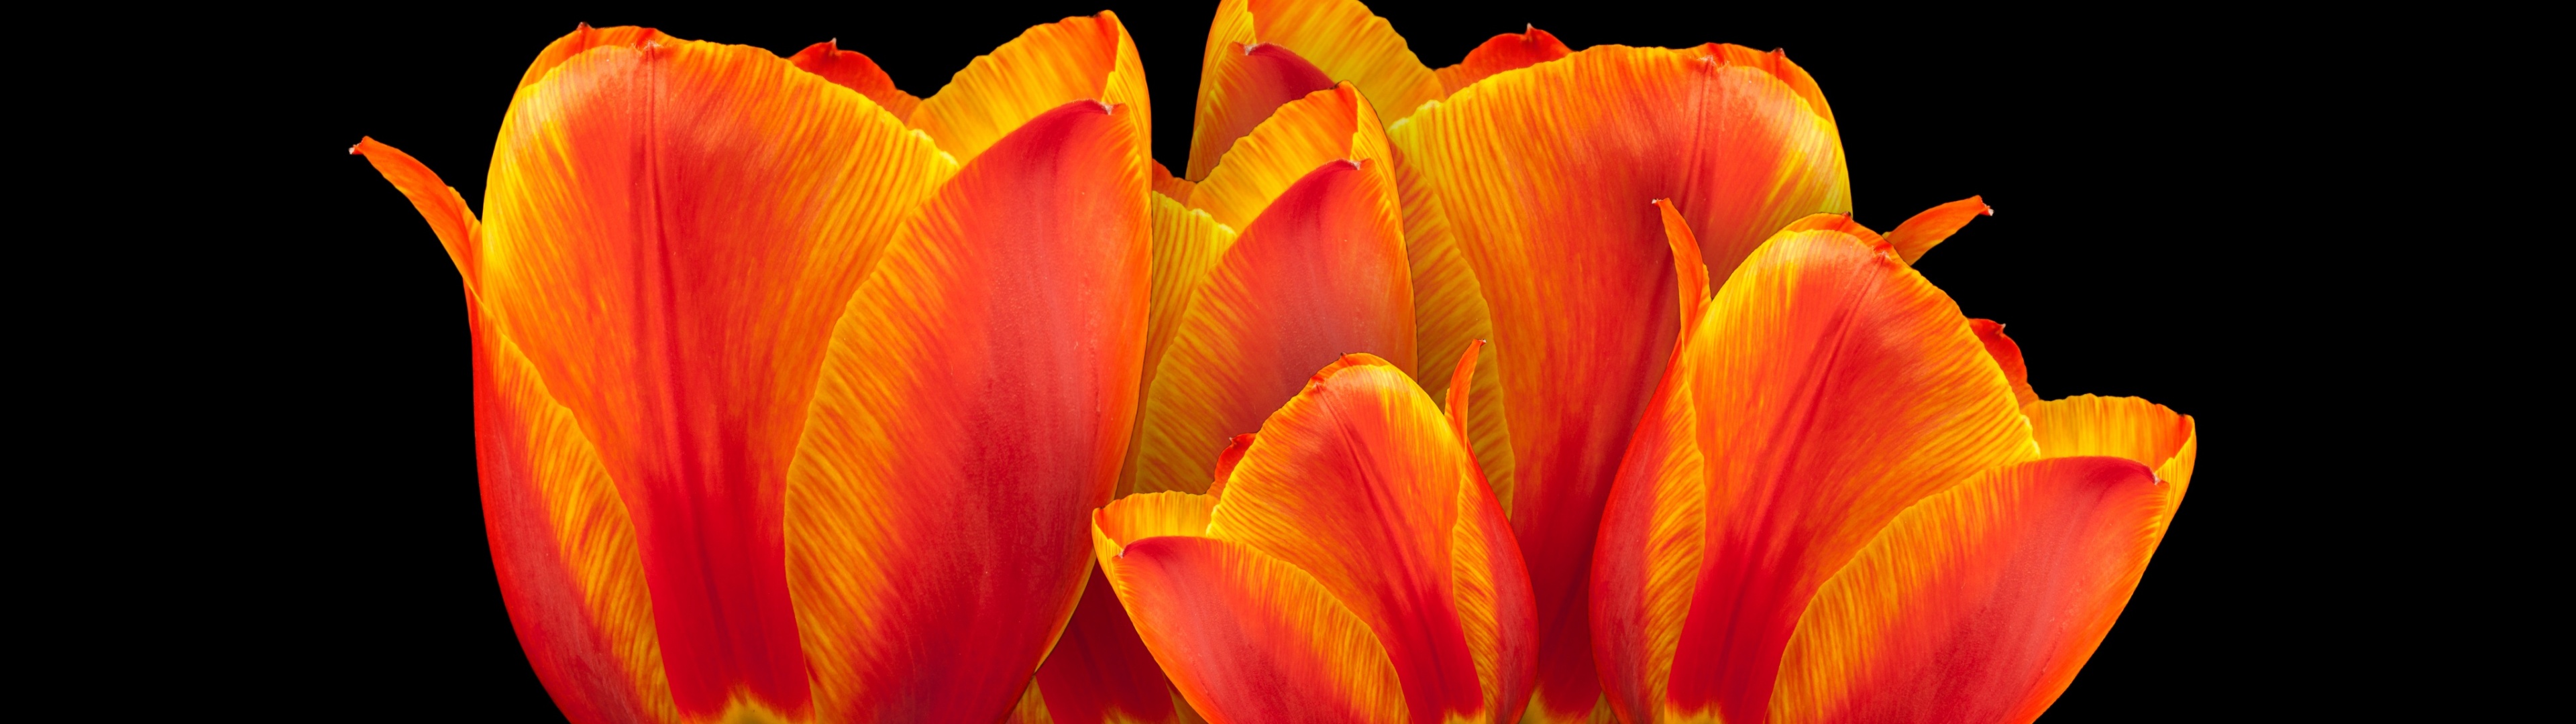 Orange tulips Wallpaper 4K, Black background, Spring flowers, Colorful, Flowers